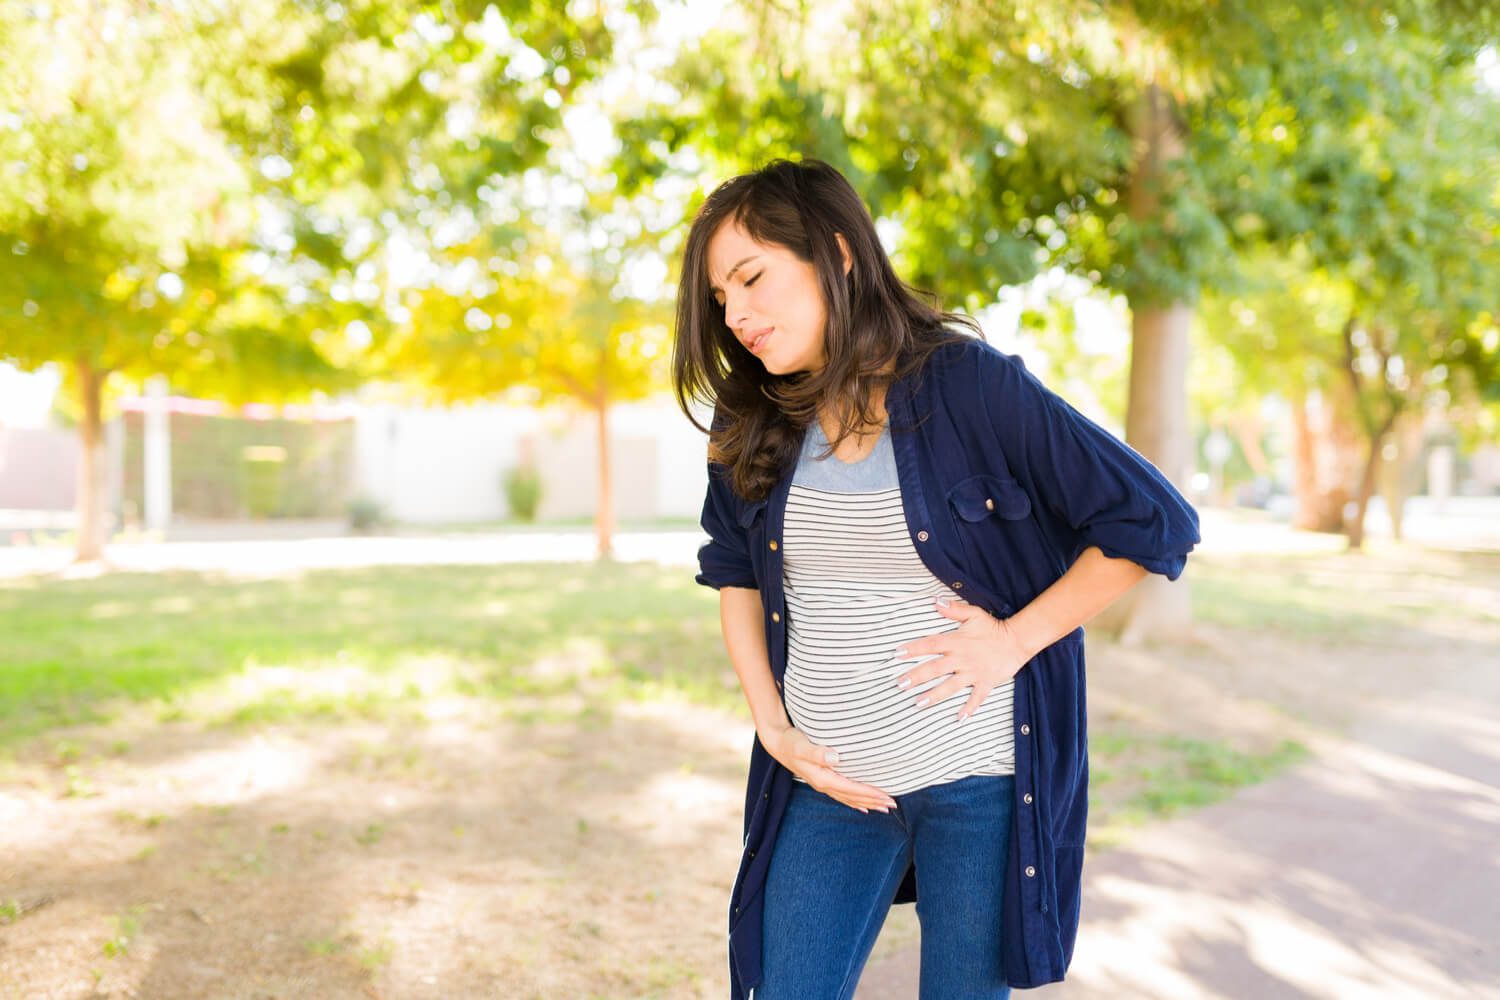 Symptoms Of SPD During Pregnancy